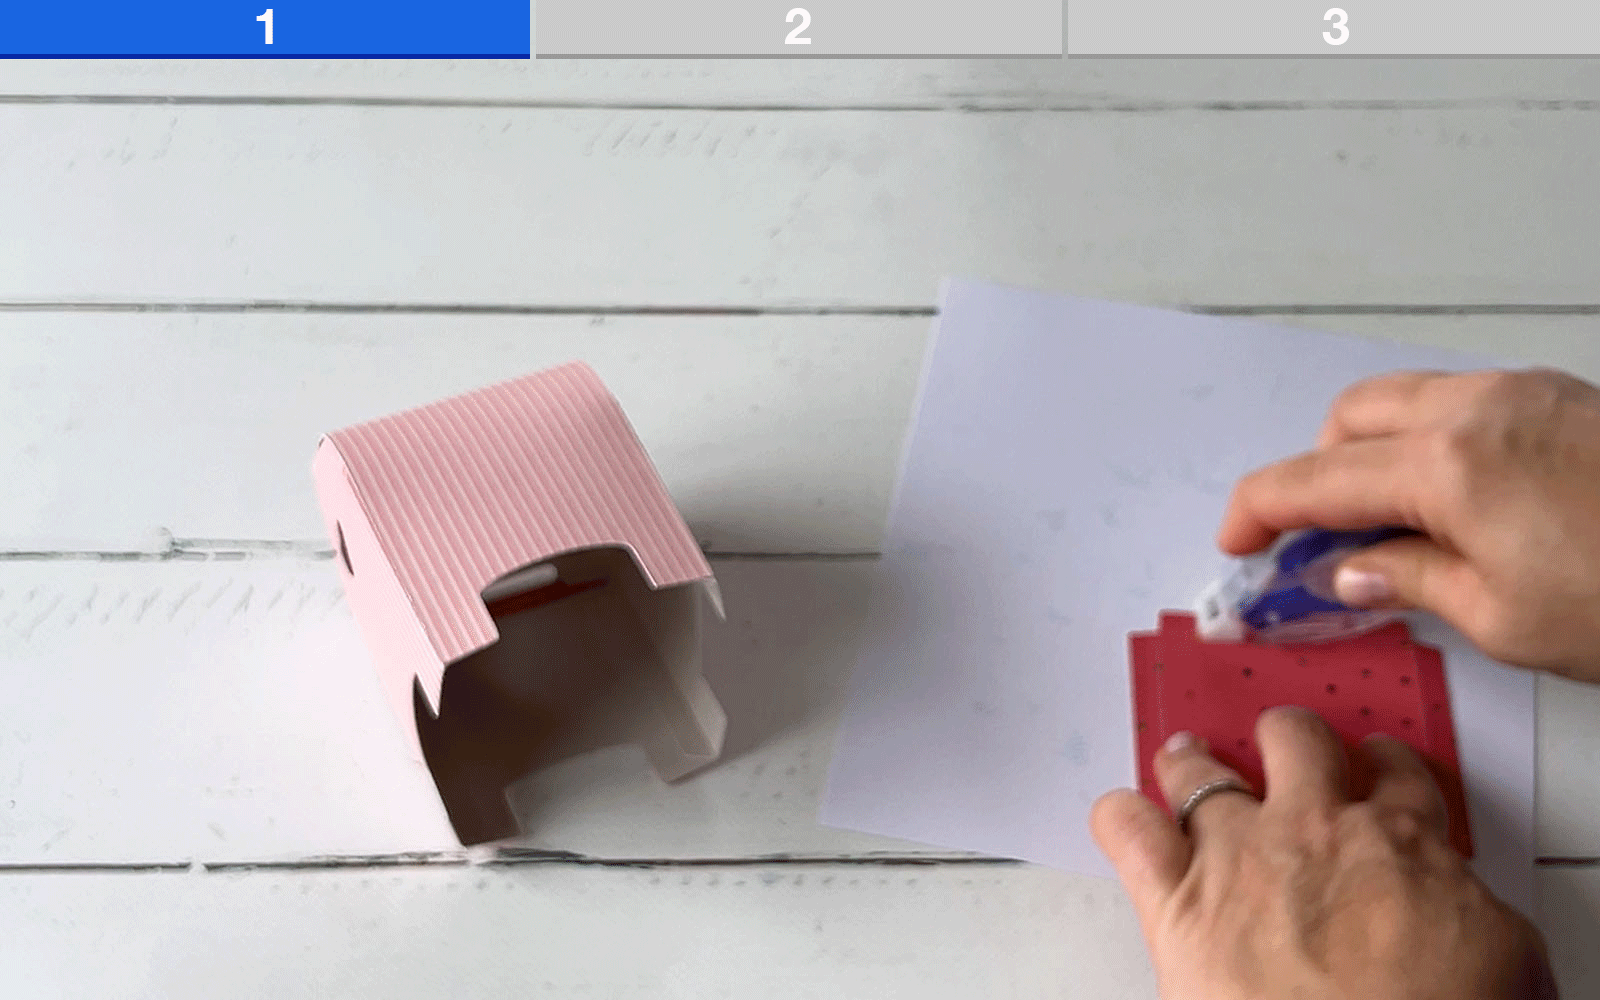 Hand applying glue